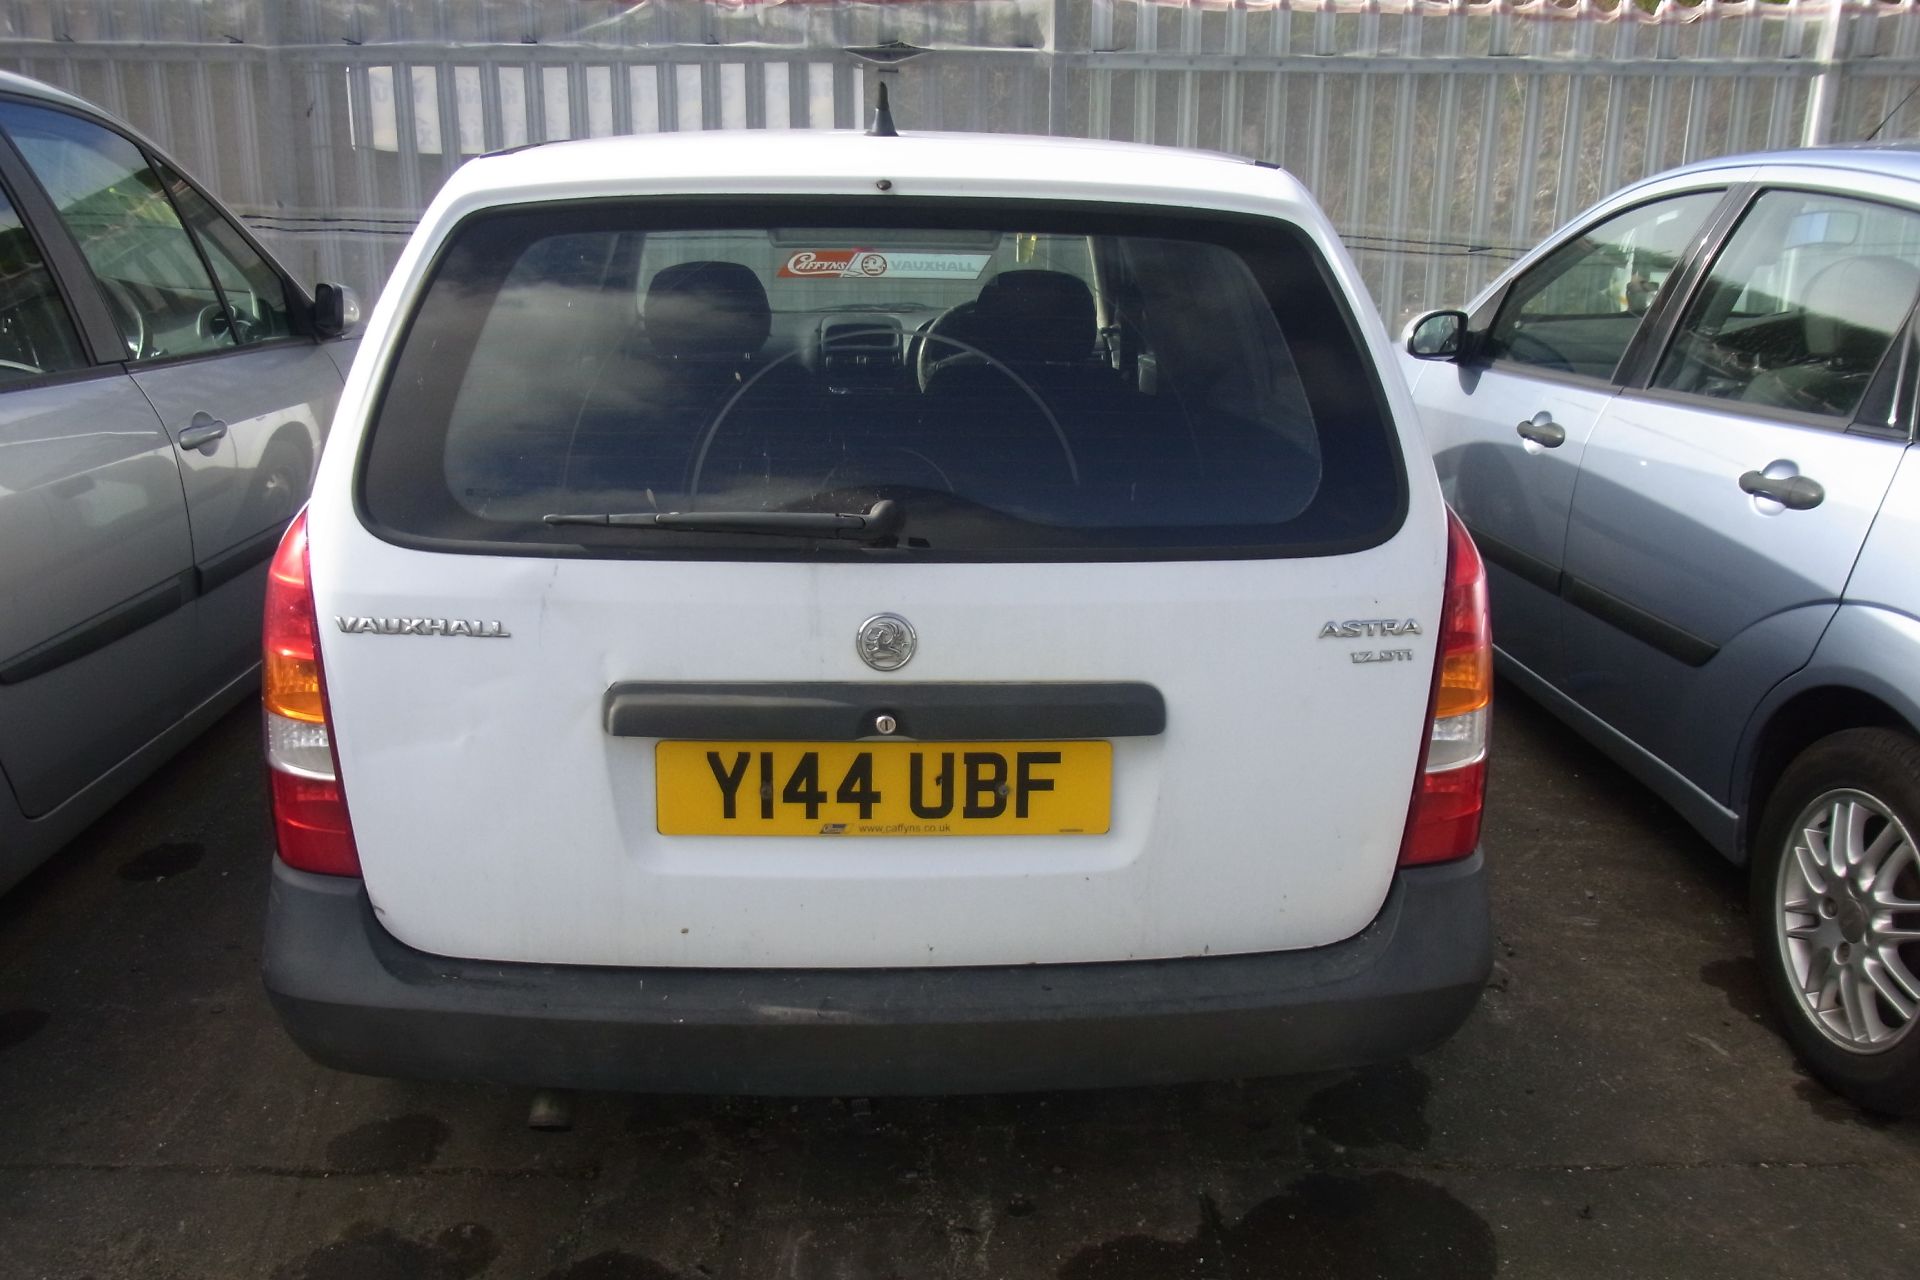 Y144 UBF - Vauxhall Astra Envoy DTI - Image 3 of 3